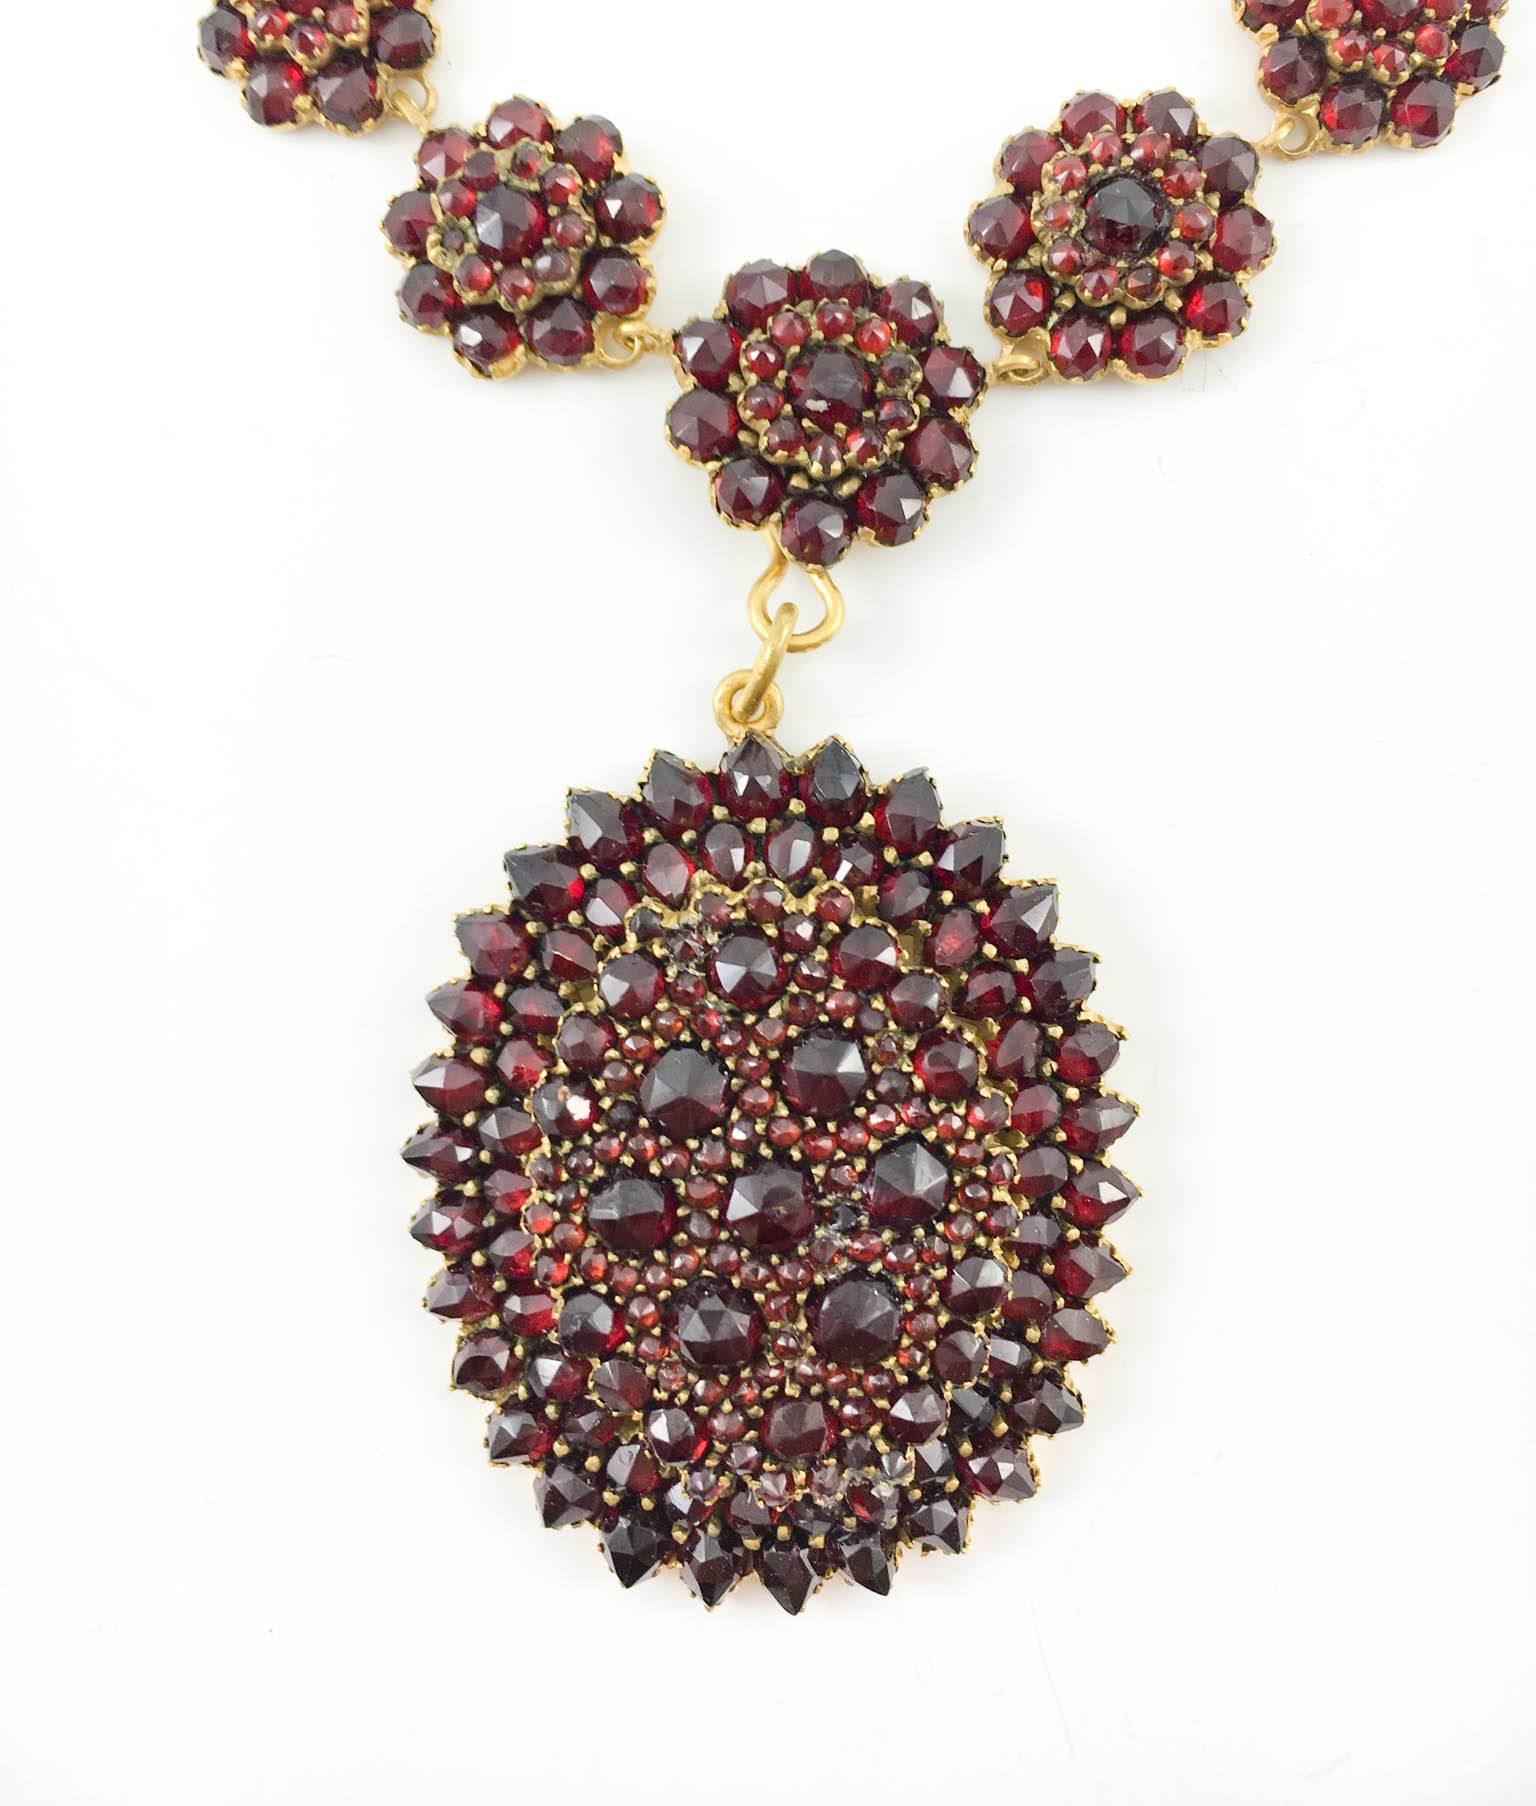 Antique Hungarian Garnet Necklace - 1900s 1